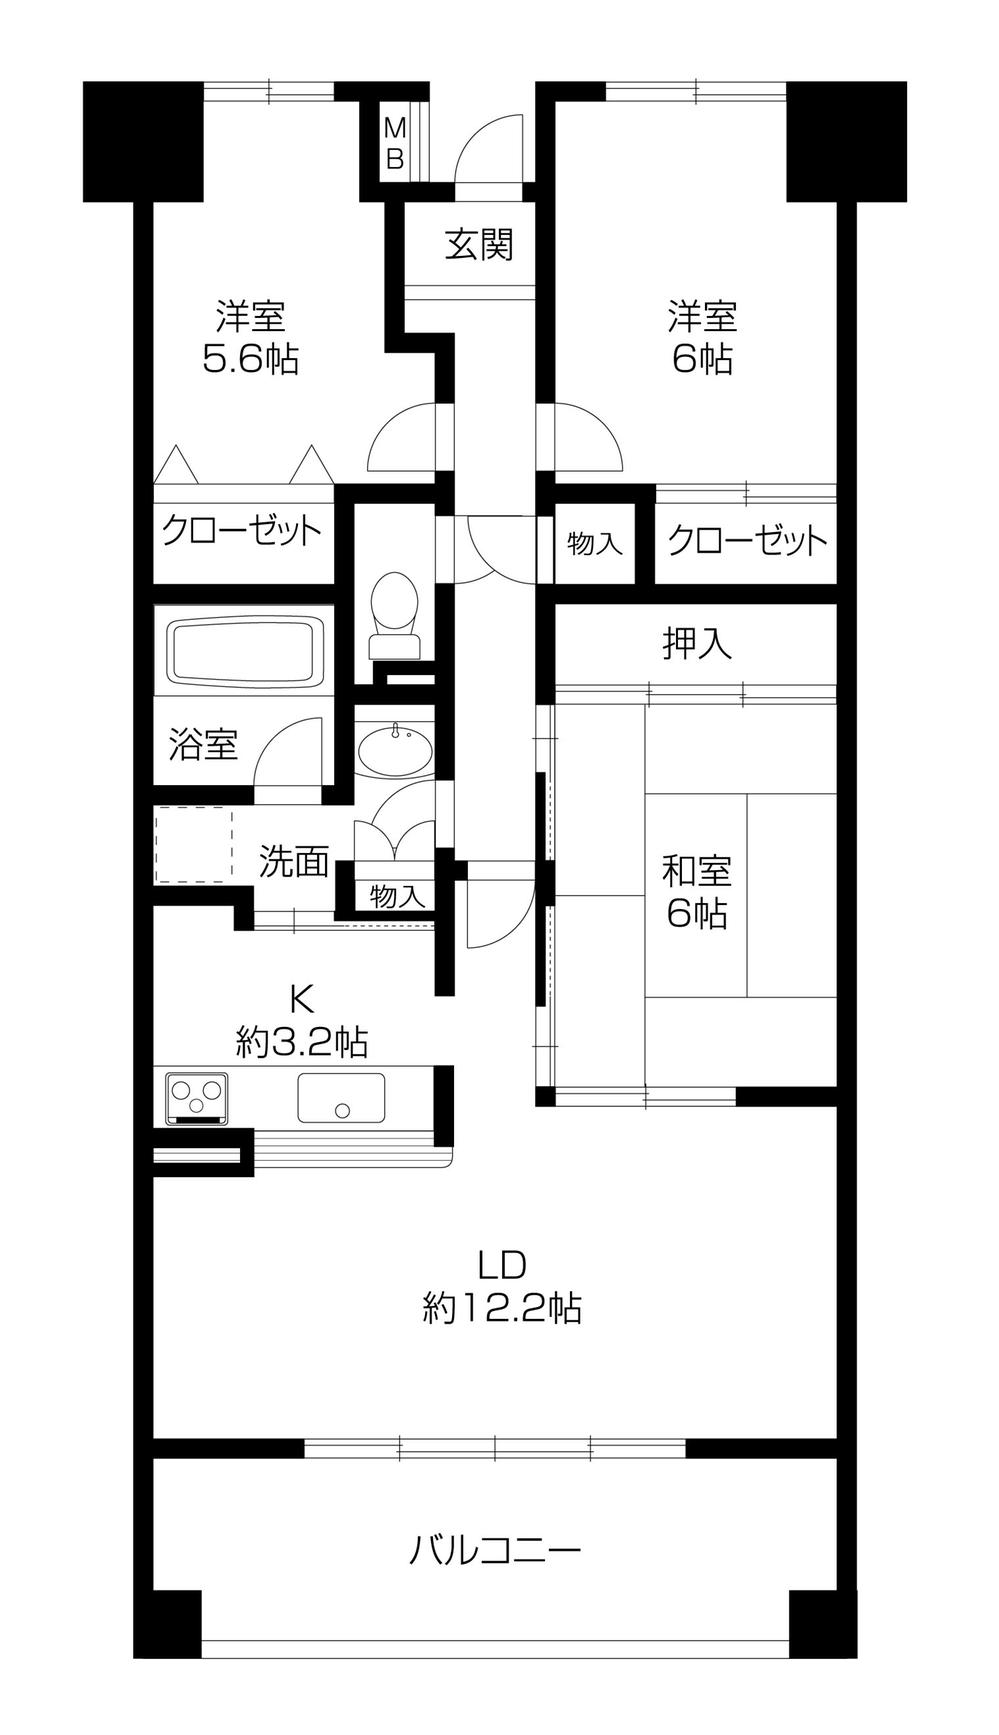 Floor plan. 3LDK, Price 17.5 million yen, Occupied area 73.19 sq m , Balcony area 11.65 sq m ◎ no smoking house